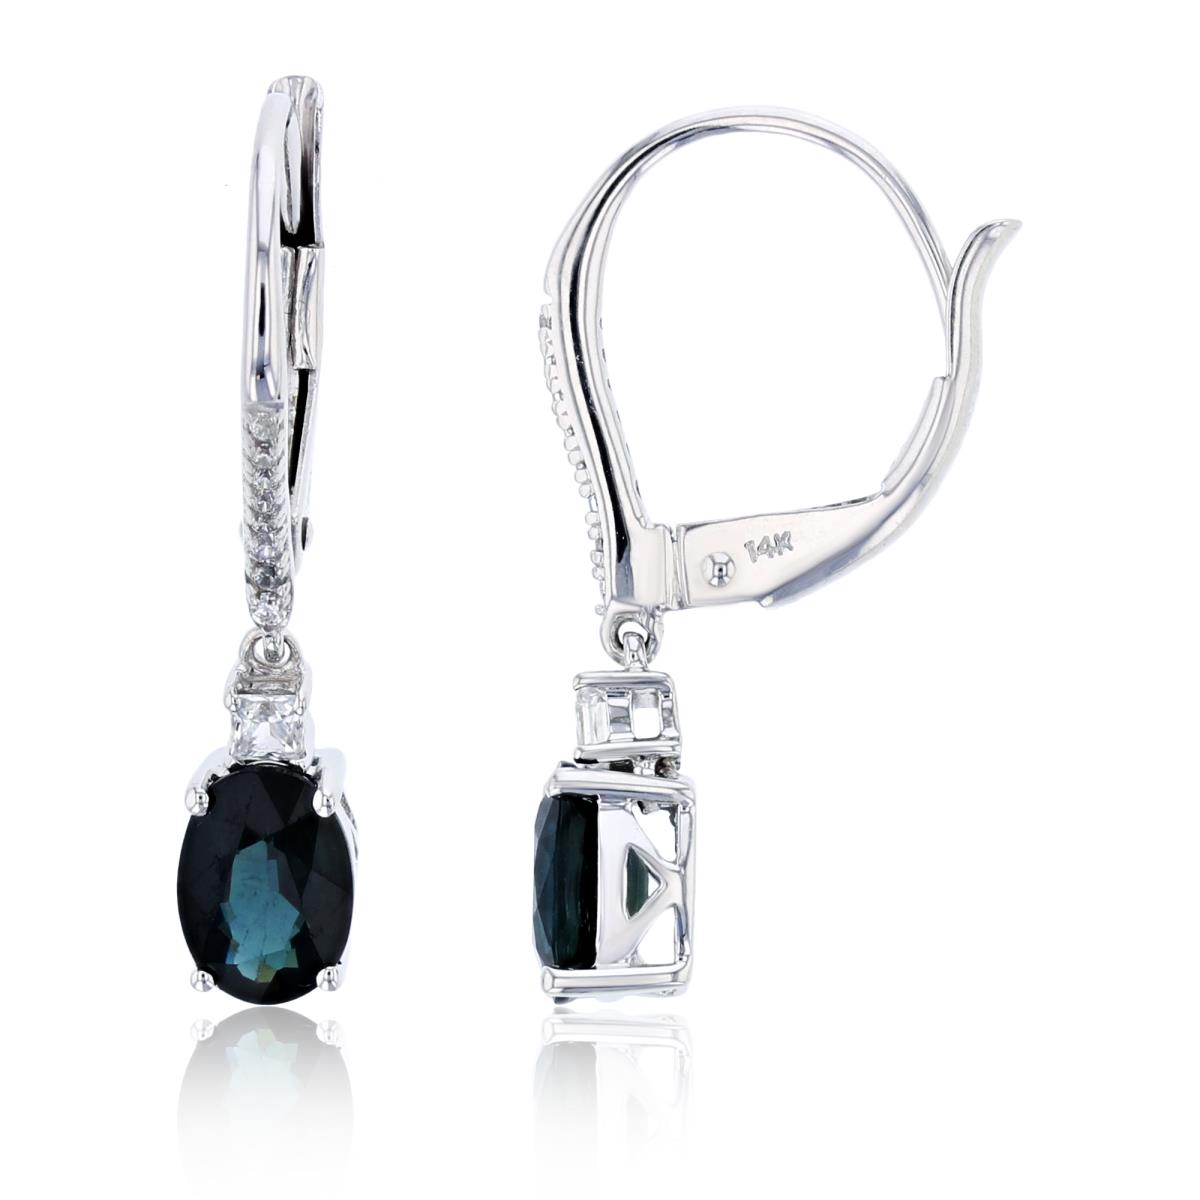 10K White Gold 0.06cttw Rnd Diamonds & 7x5mm Ov Created Blue Sapphire/ Created White Sapphire Dangling Earring